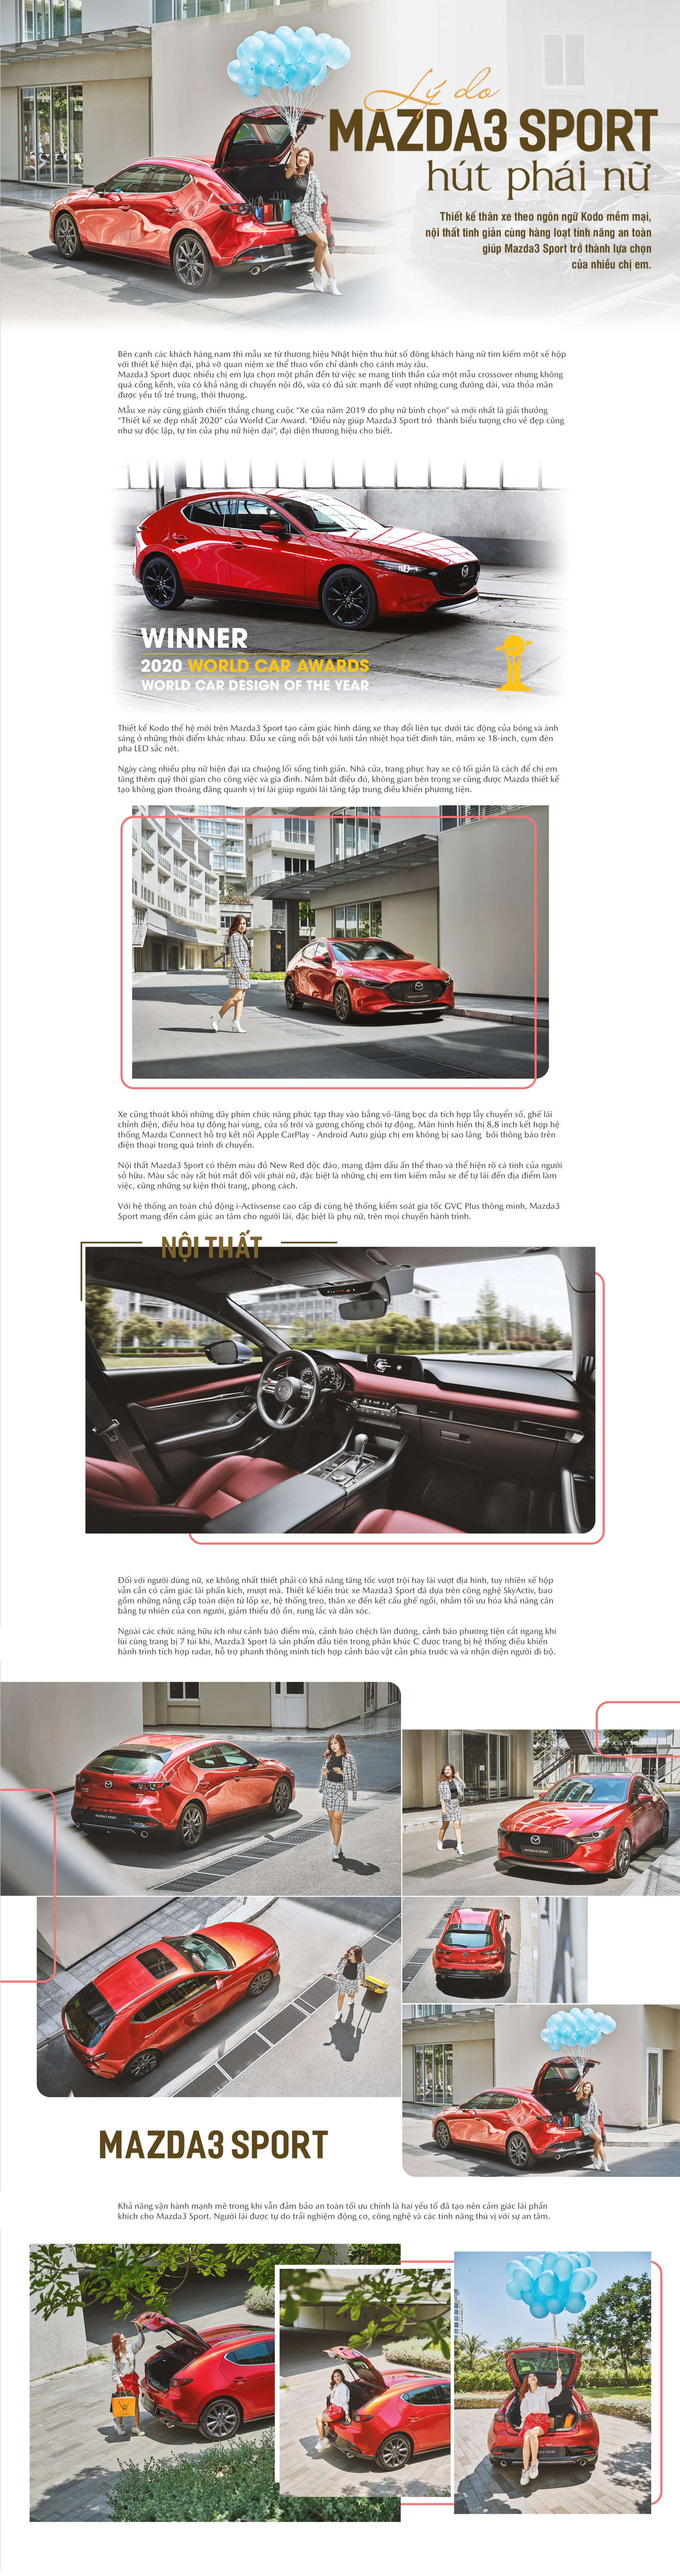 Lý do Mazda3 Sport hút phái nữ | Mazda Tiền Giang